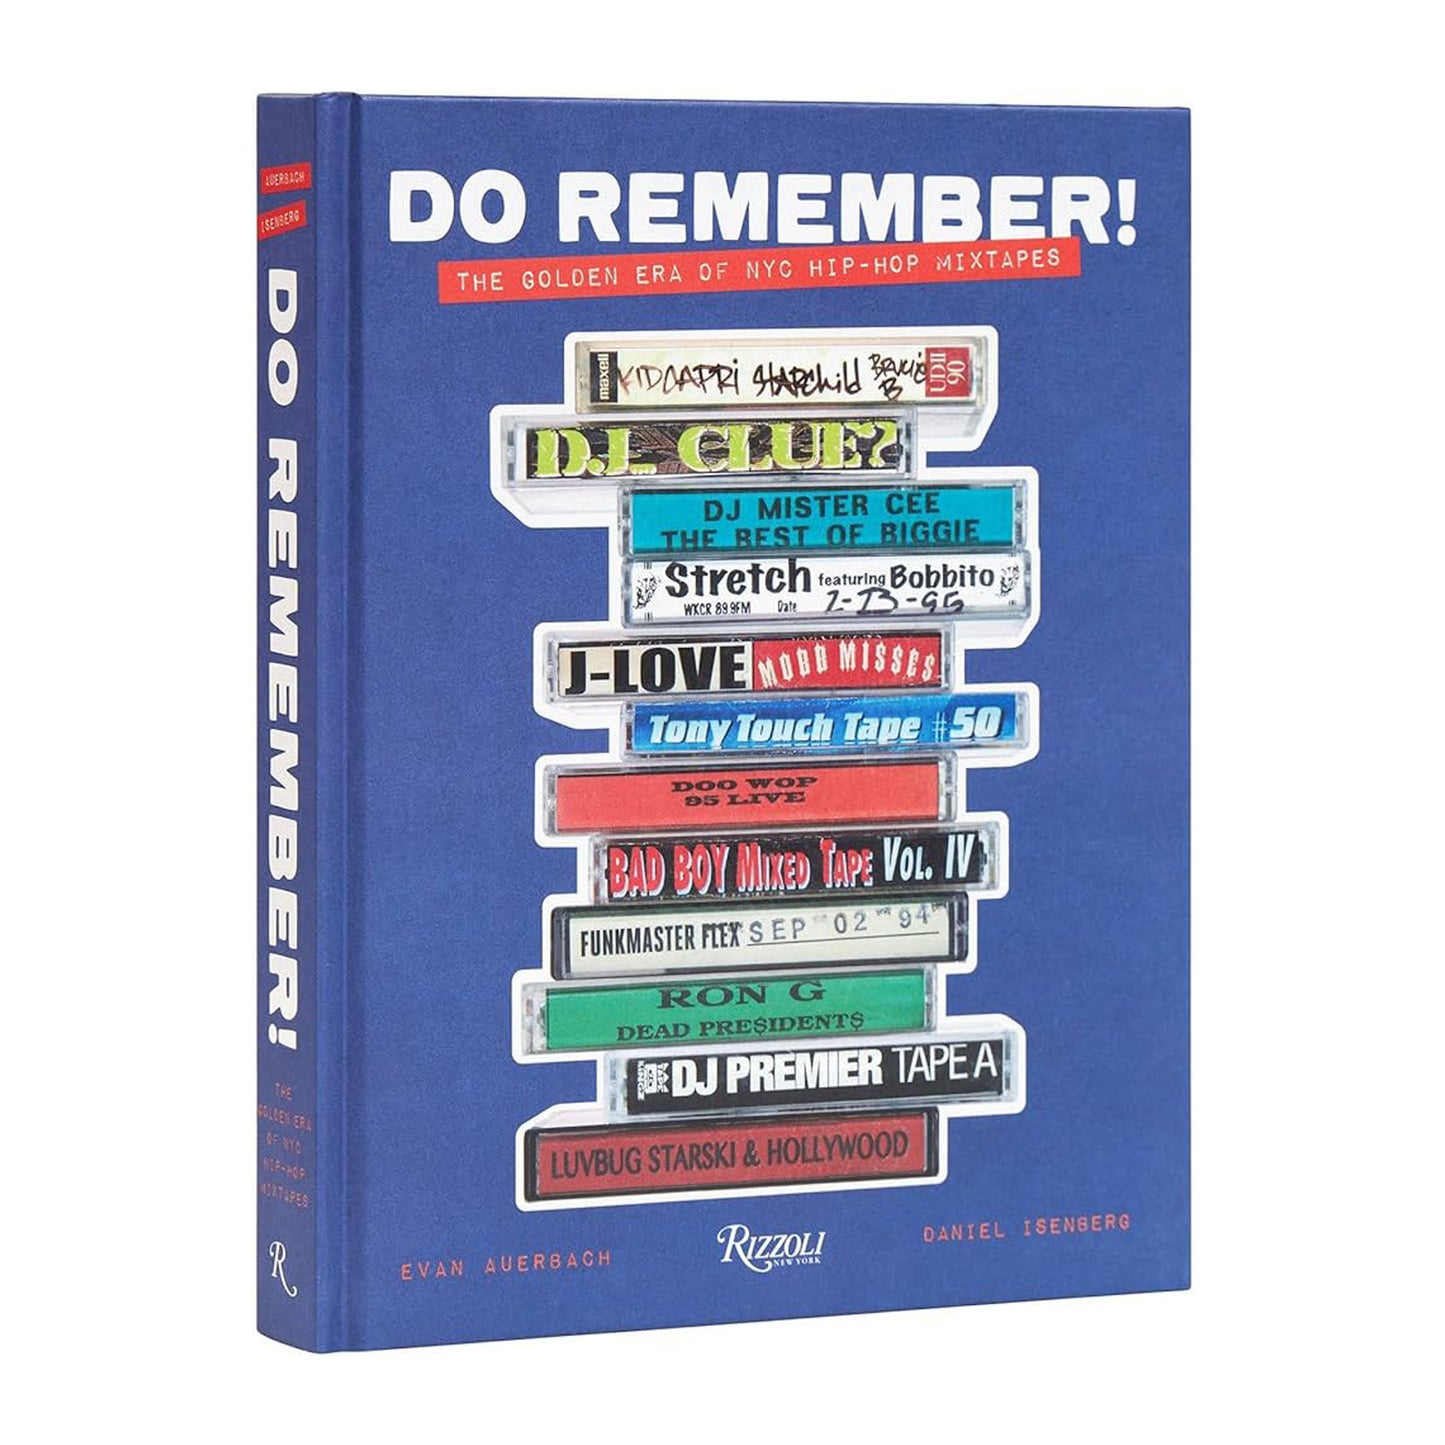 Do Remember!: The Golden Era of NYC Hip-Hop Mixtapes